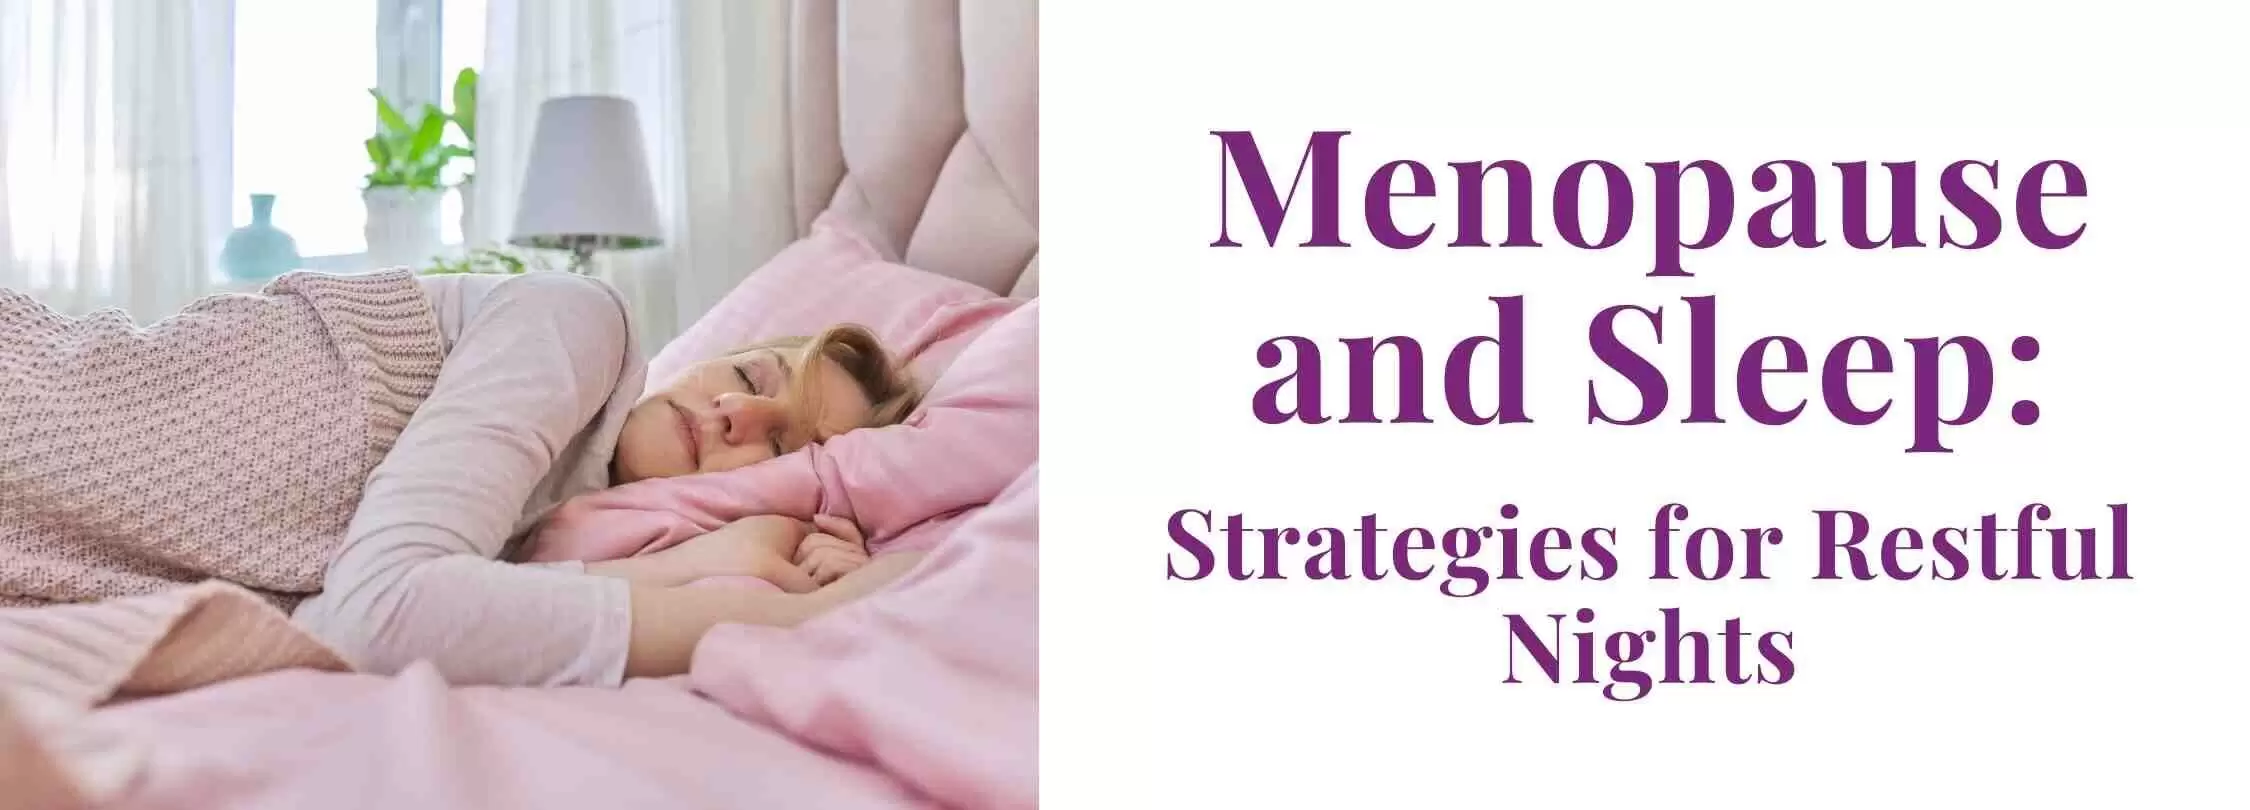 Menopause and Sleep: Strategies for Restful Nights